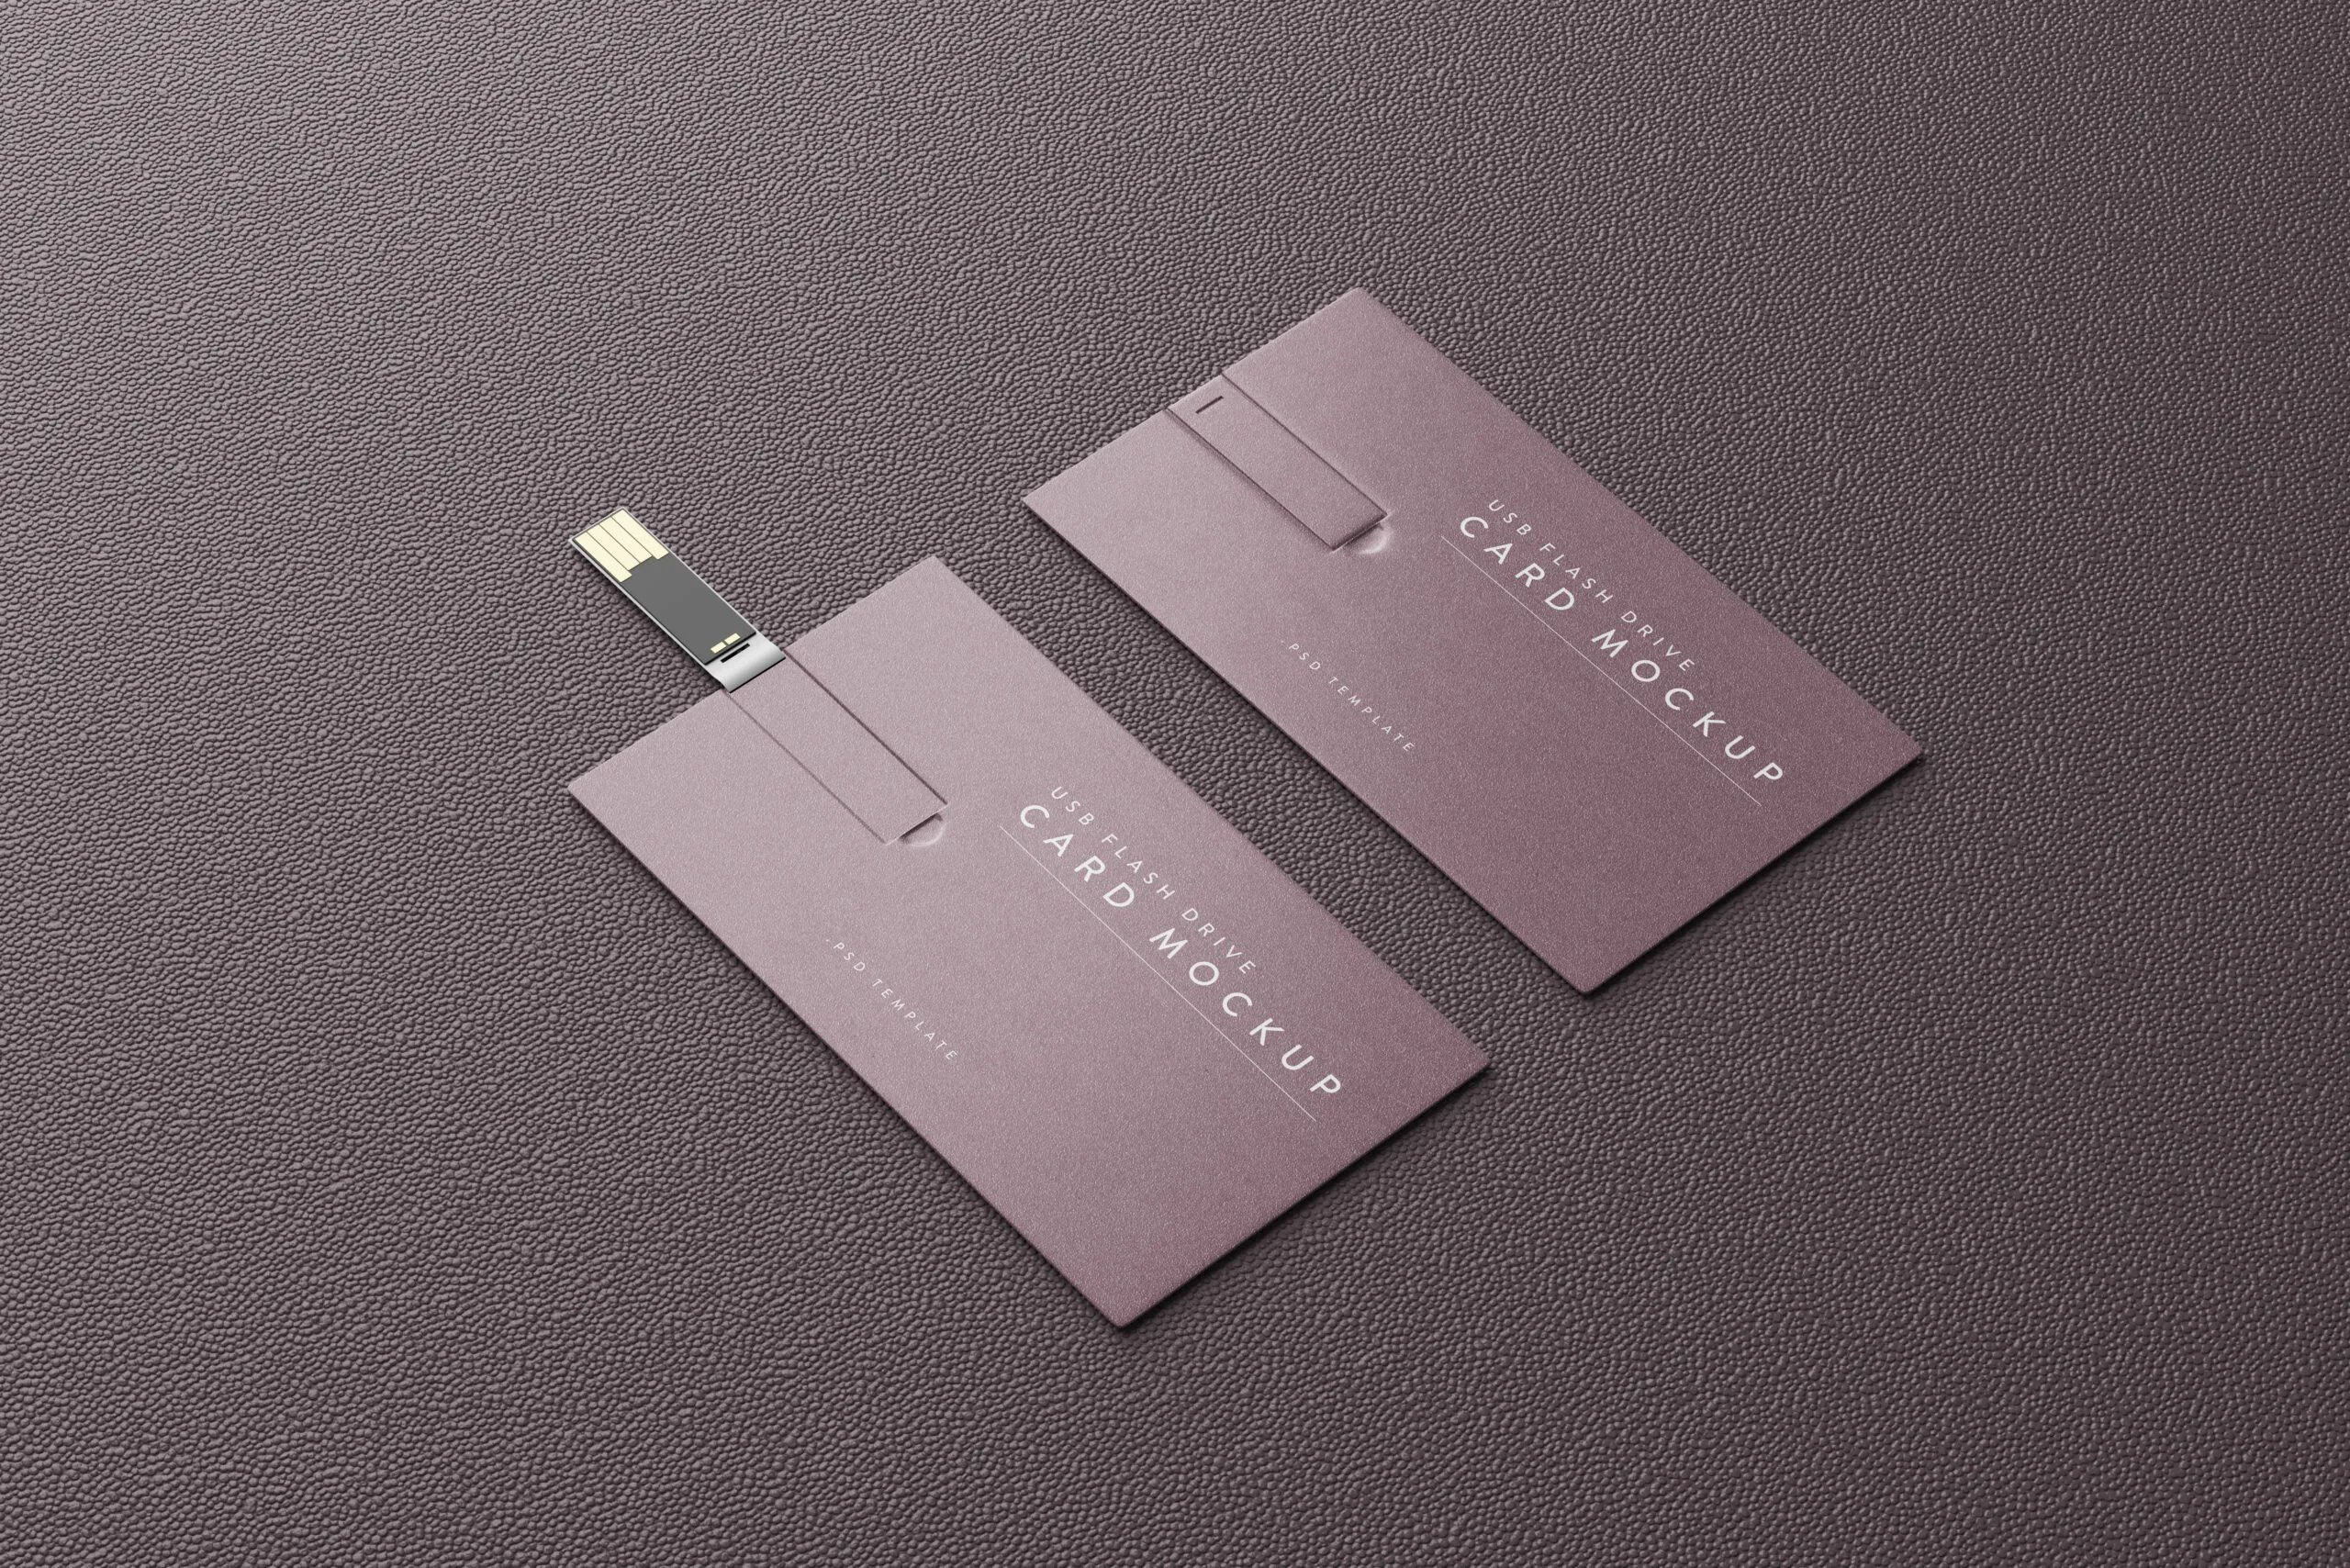 5 USB Flash Drive Business Card Mockups in Distinct Shots FREE PSD